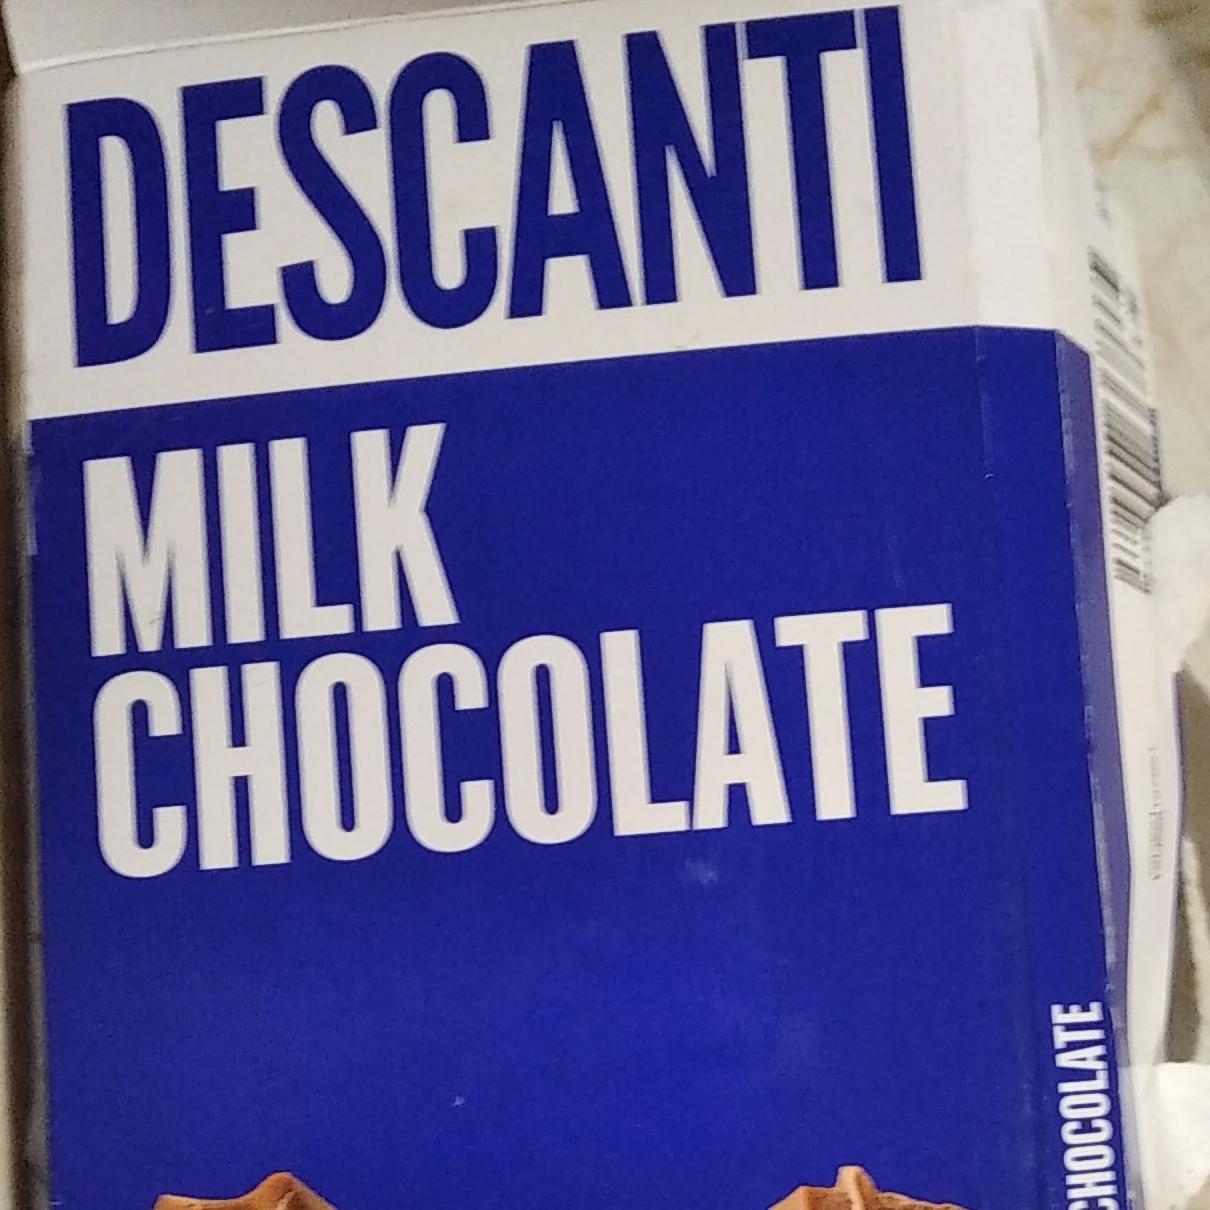 Fotografie - Descanti milk chocolate